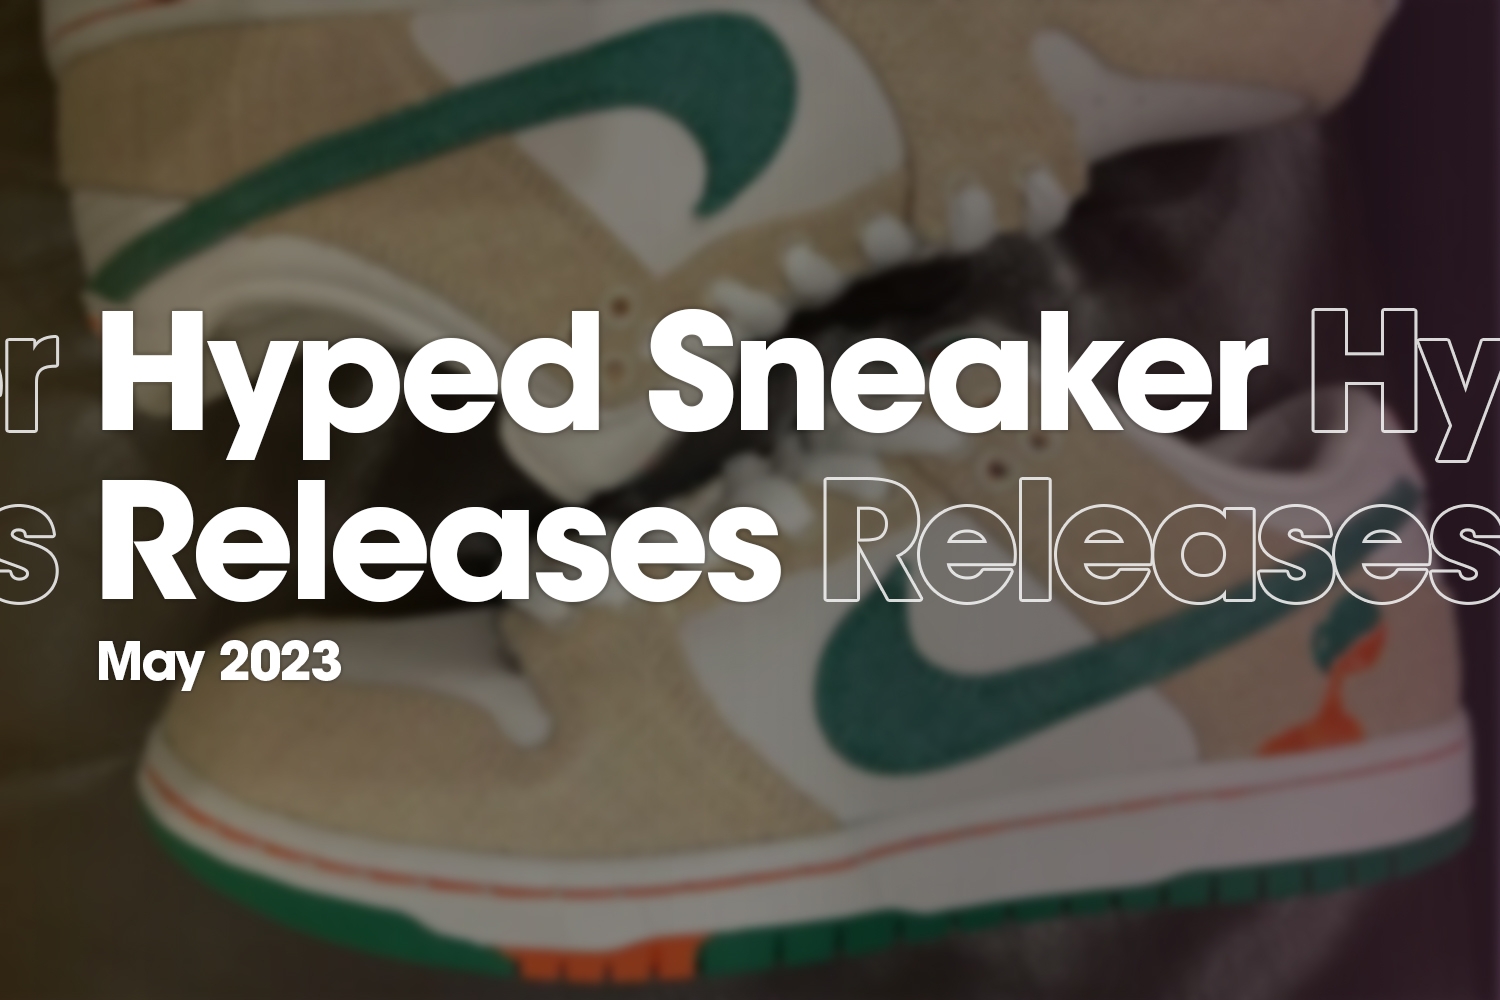 Hyped Sneaker Releases van mei 2023